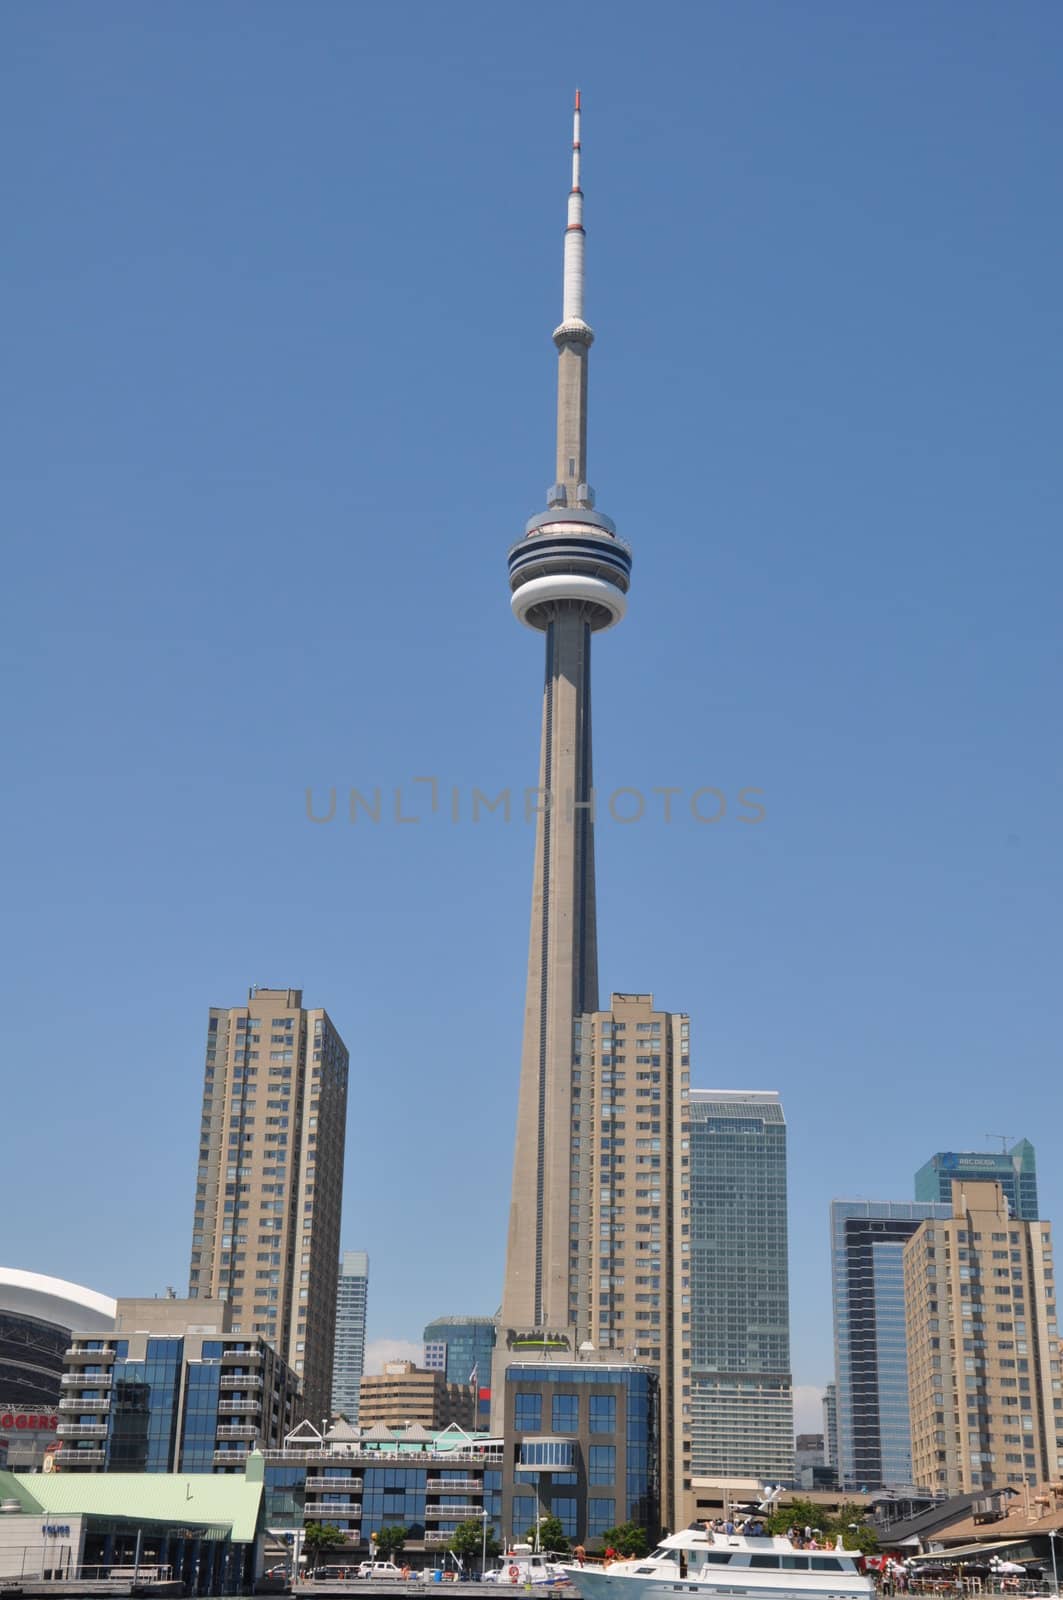 Toronto Skyline by sainaniritu